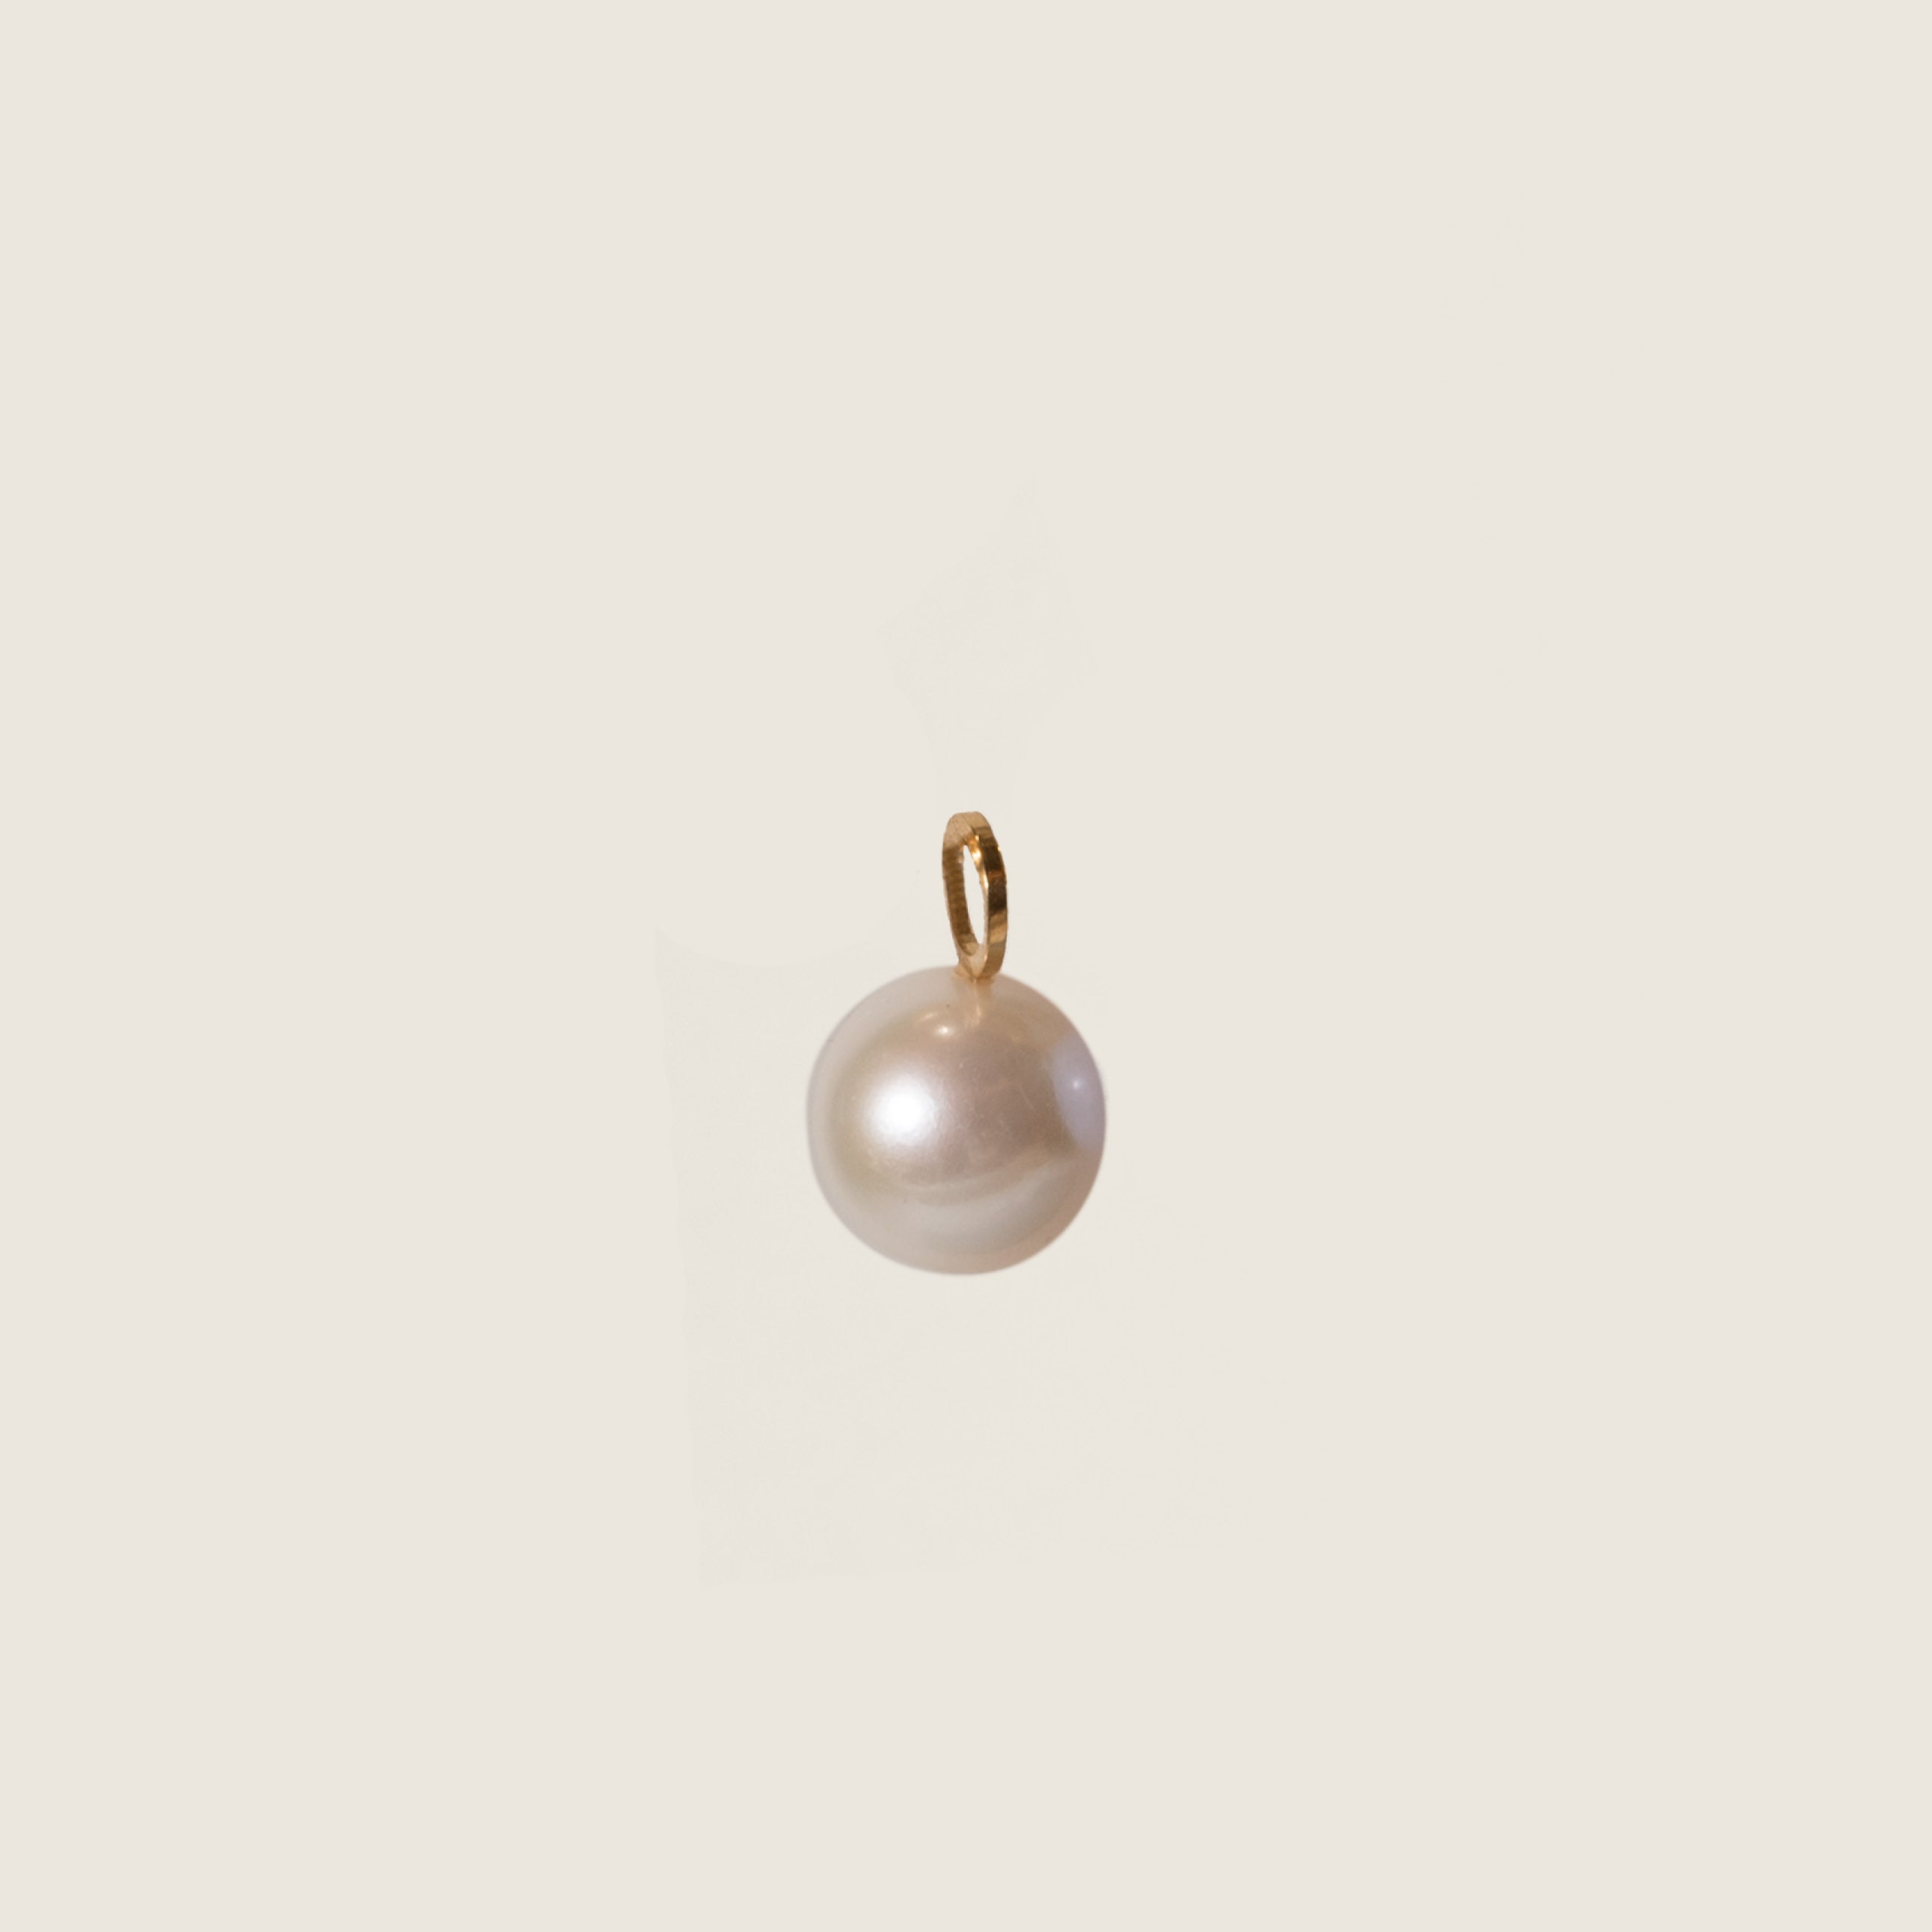 Louis pearls module